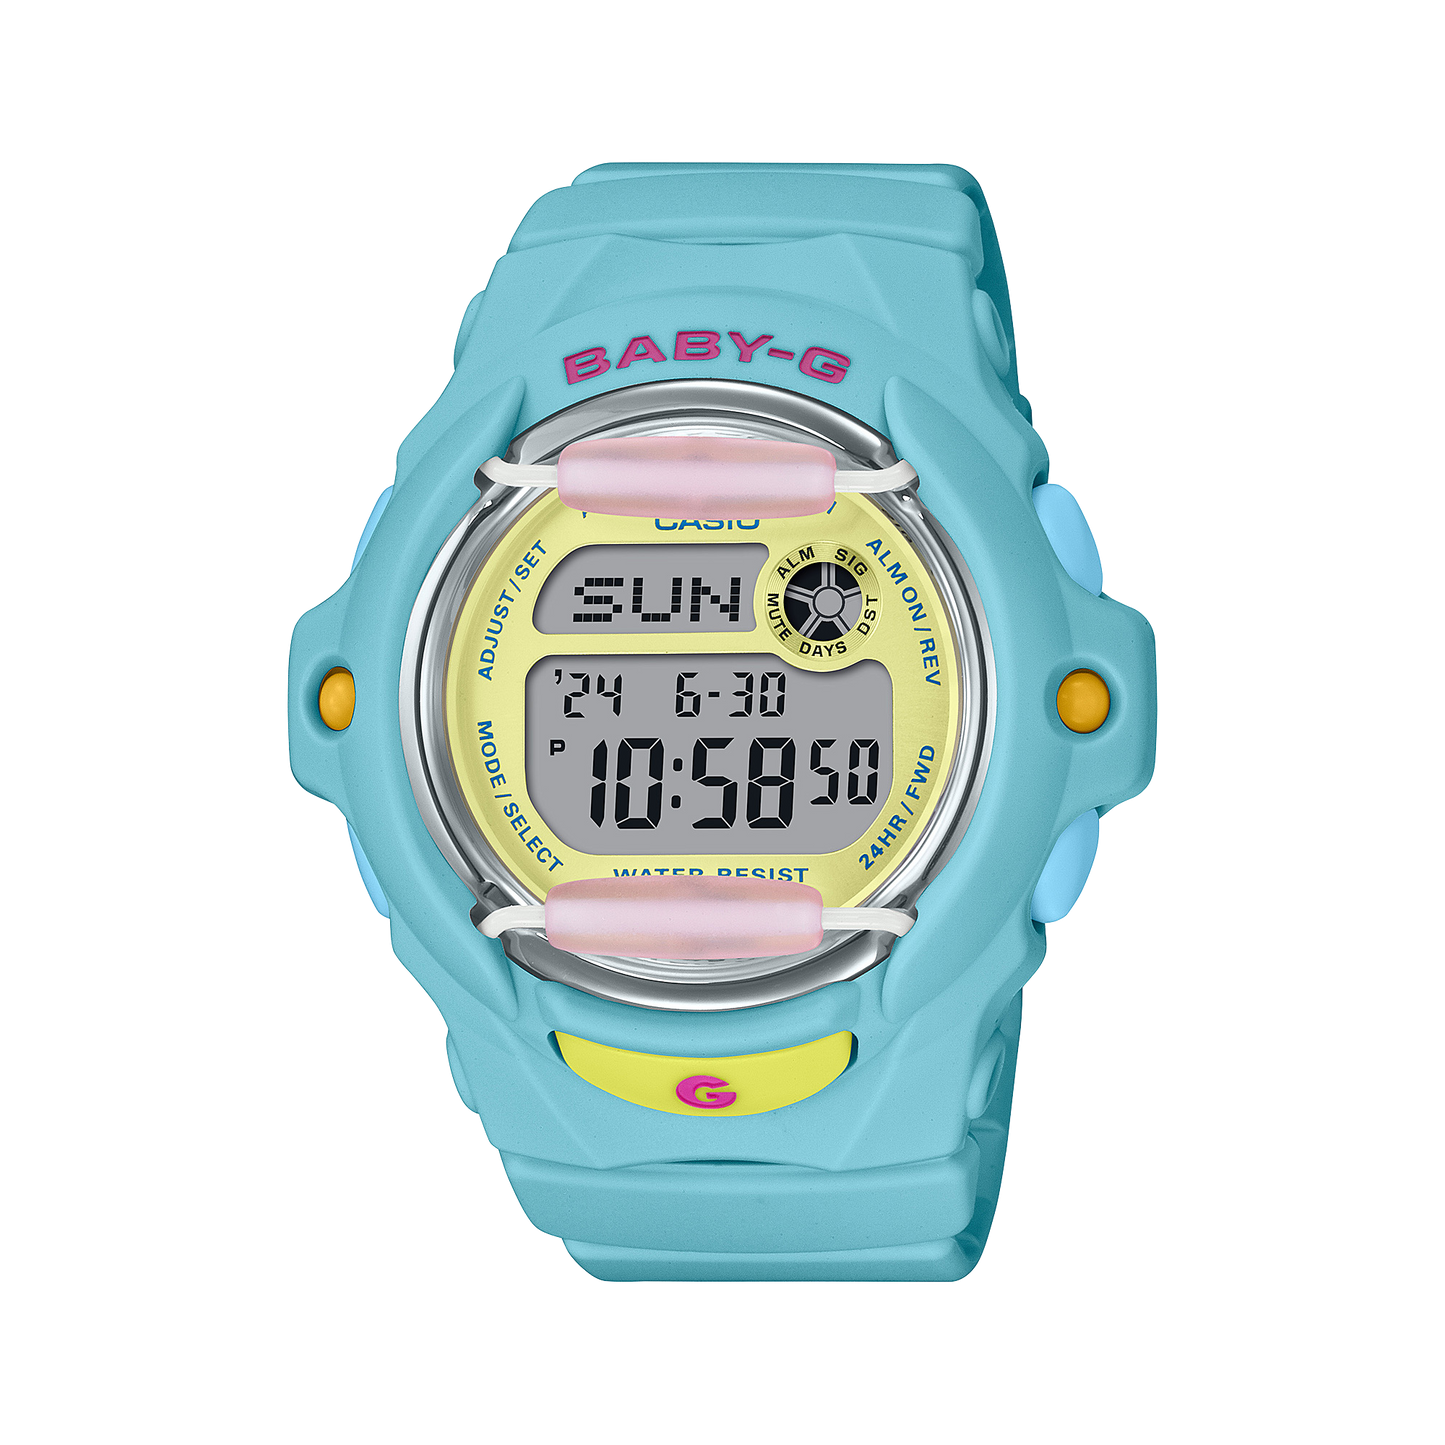 Casio Baby-G BG-169PB-2DR Digital Women's Watch Blue